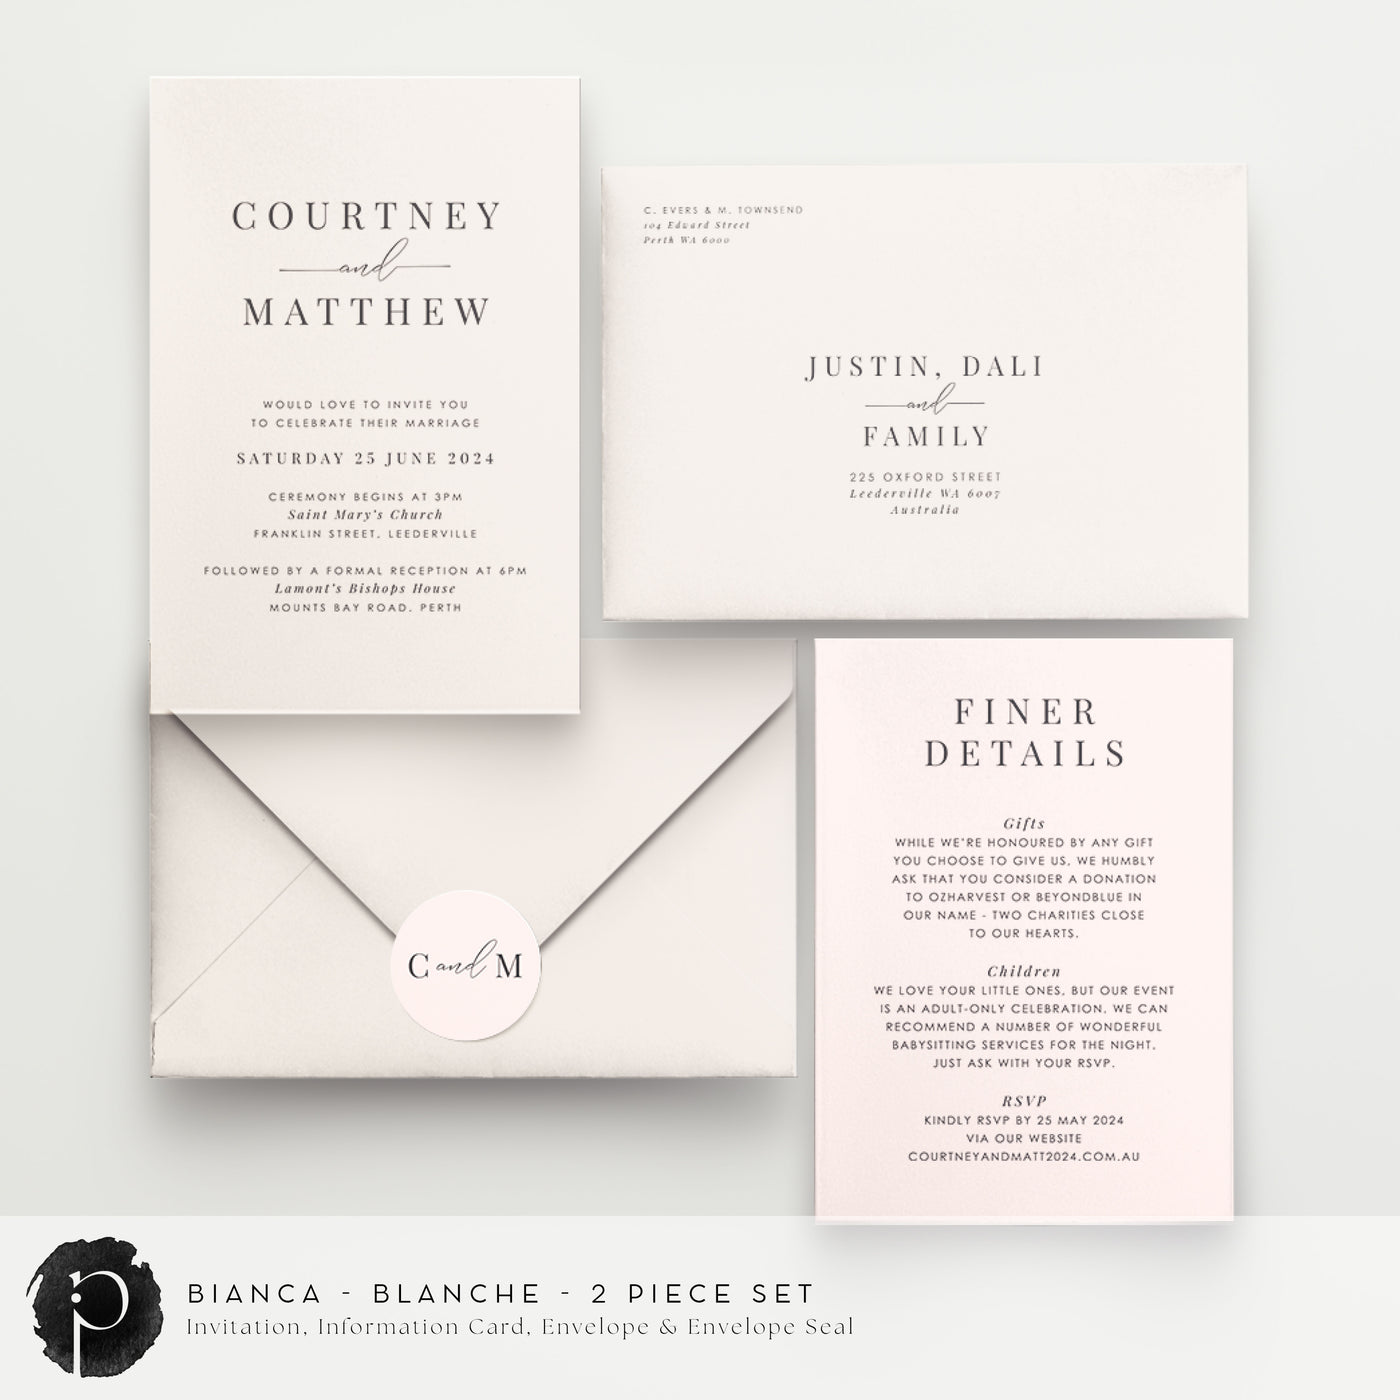 Bianca - Wedding Invitation & Information/Details Card Set